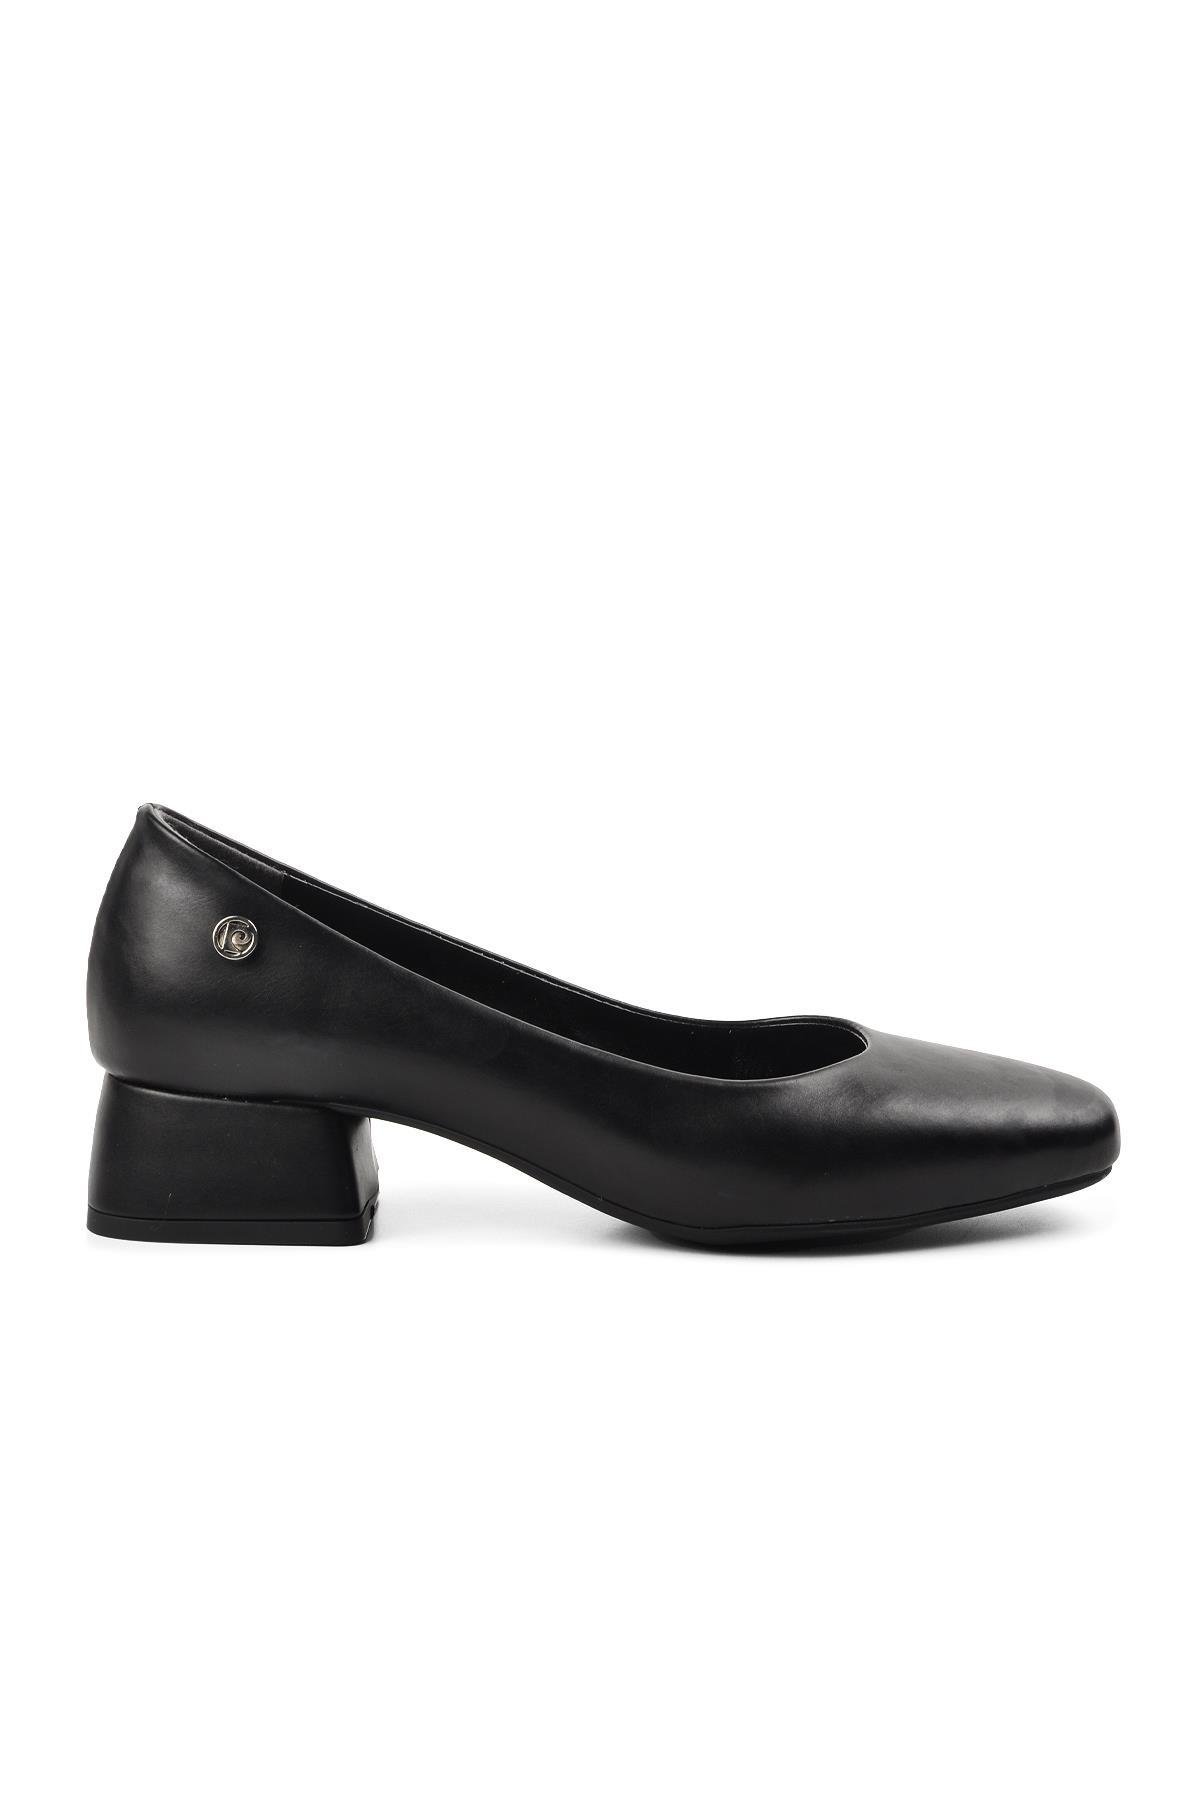 Pierre Cardin PC-52276 Siyah Kadın Topuklu Ayakkabı - Ayakmod